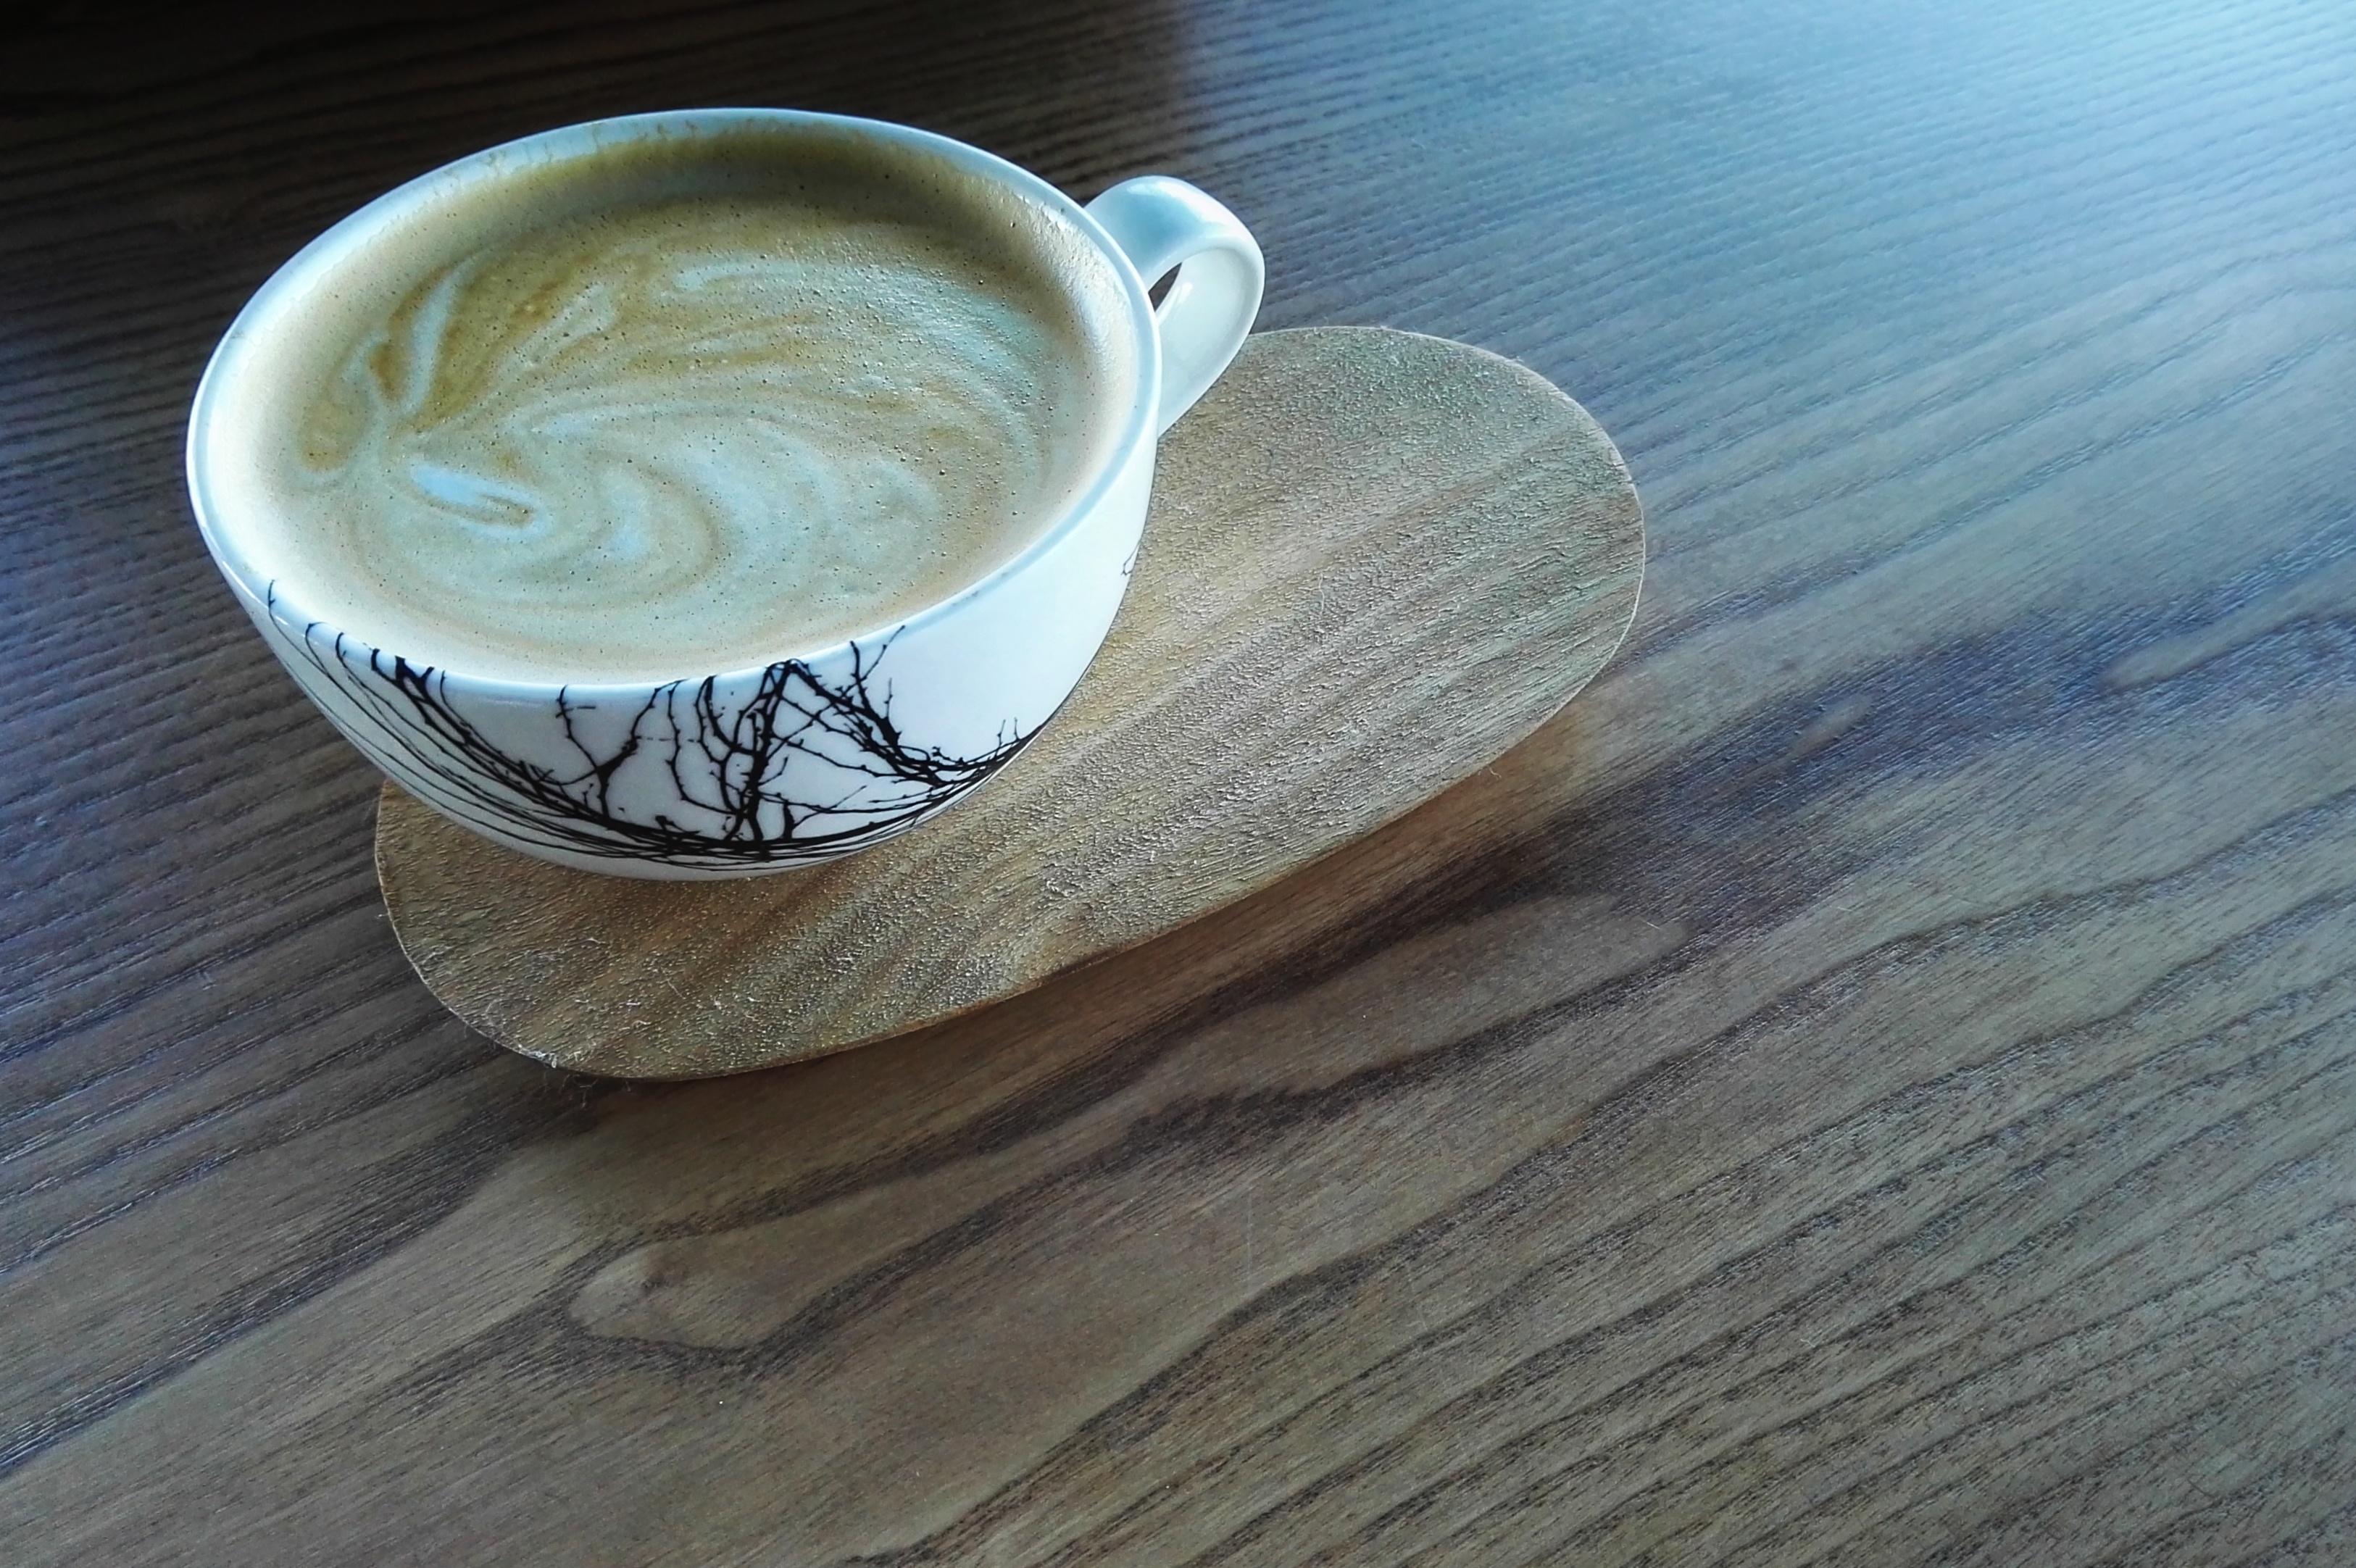 Kaffee in Kapstadt 👍
#Porzelan #FlatWhite #Holz #Kaffeezeit